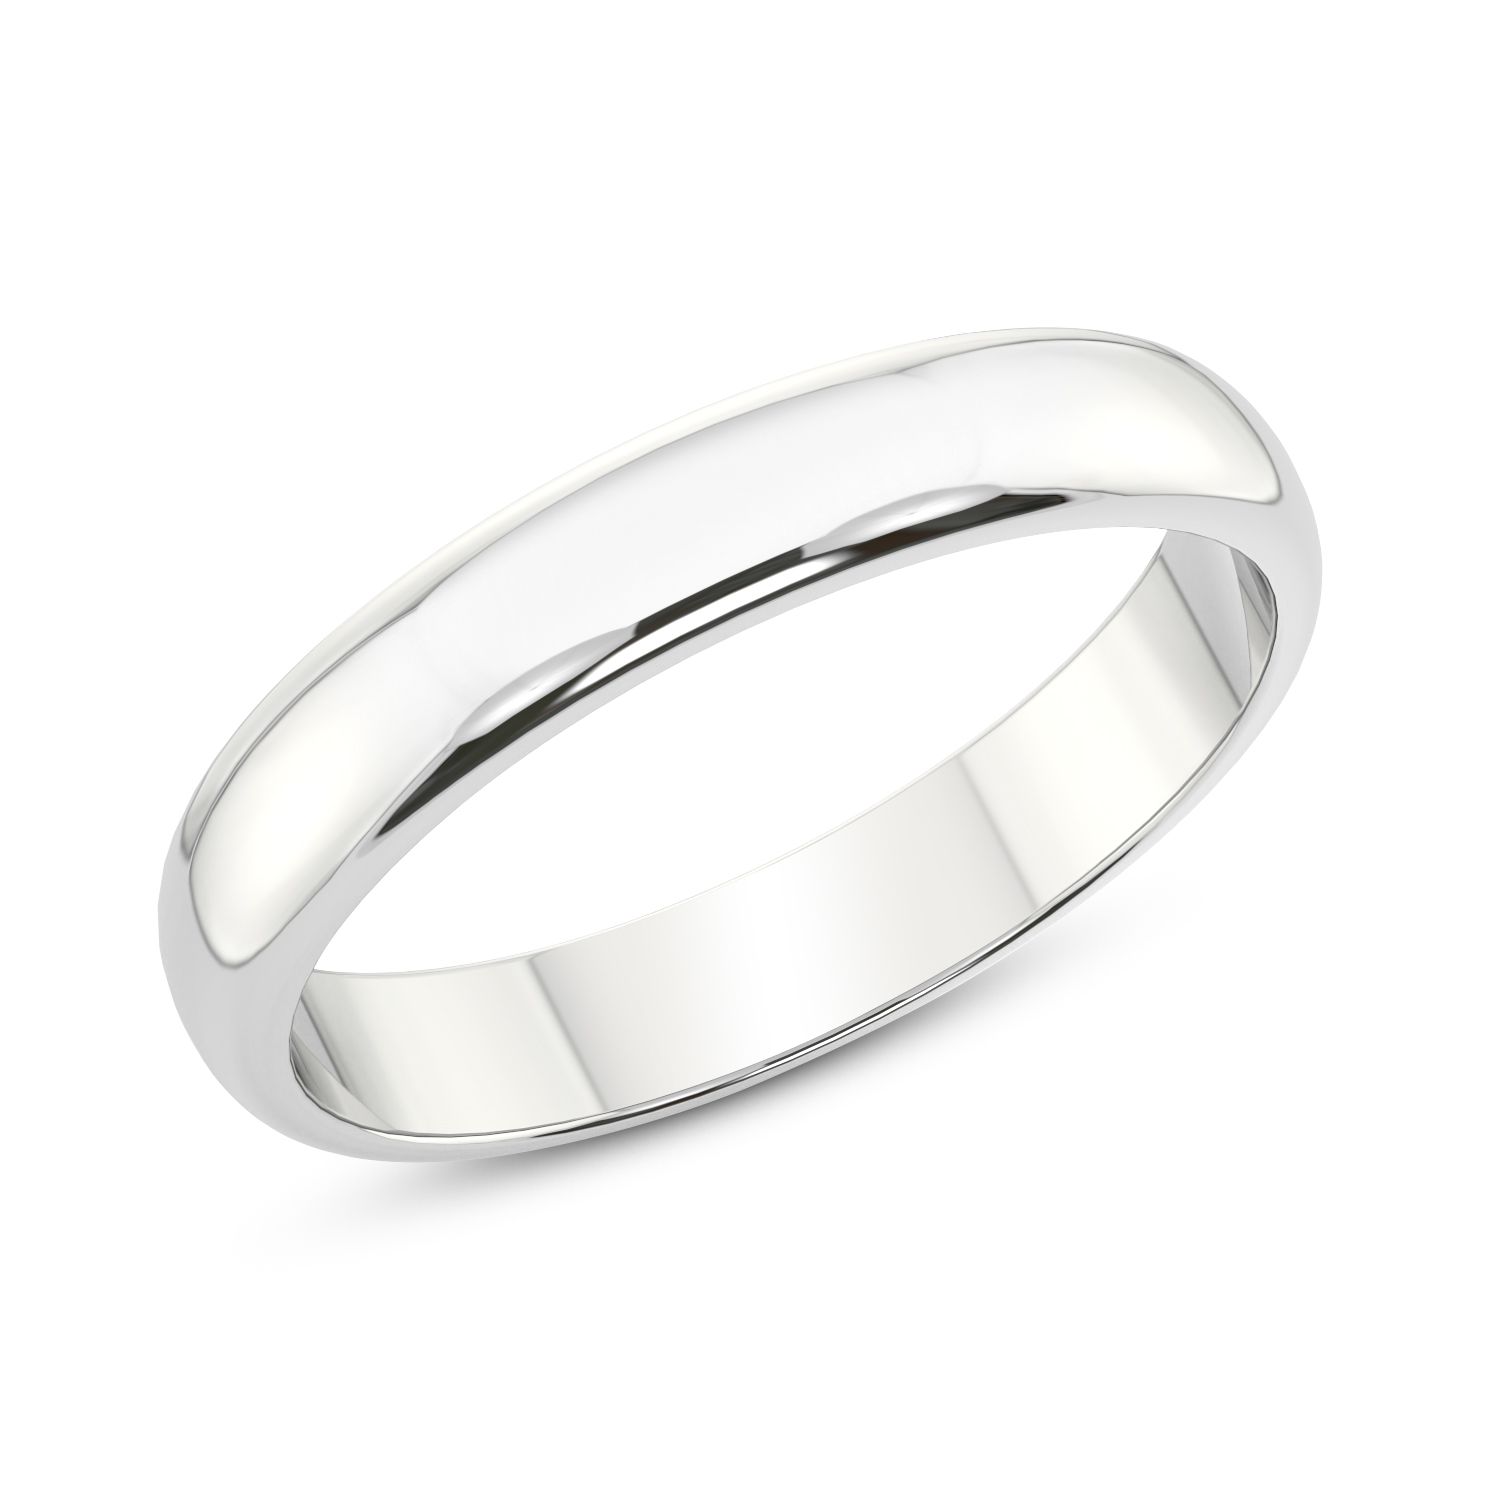 Couple Rings of your Choice! - MonogramHub.com